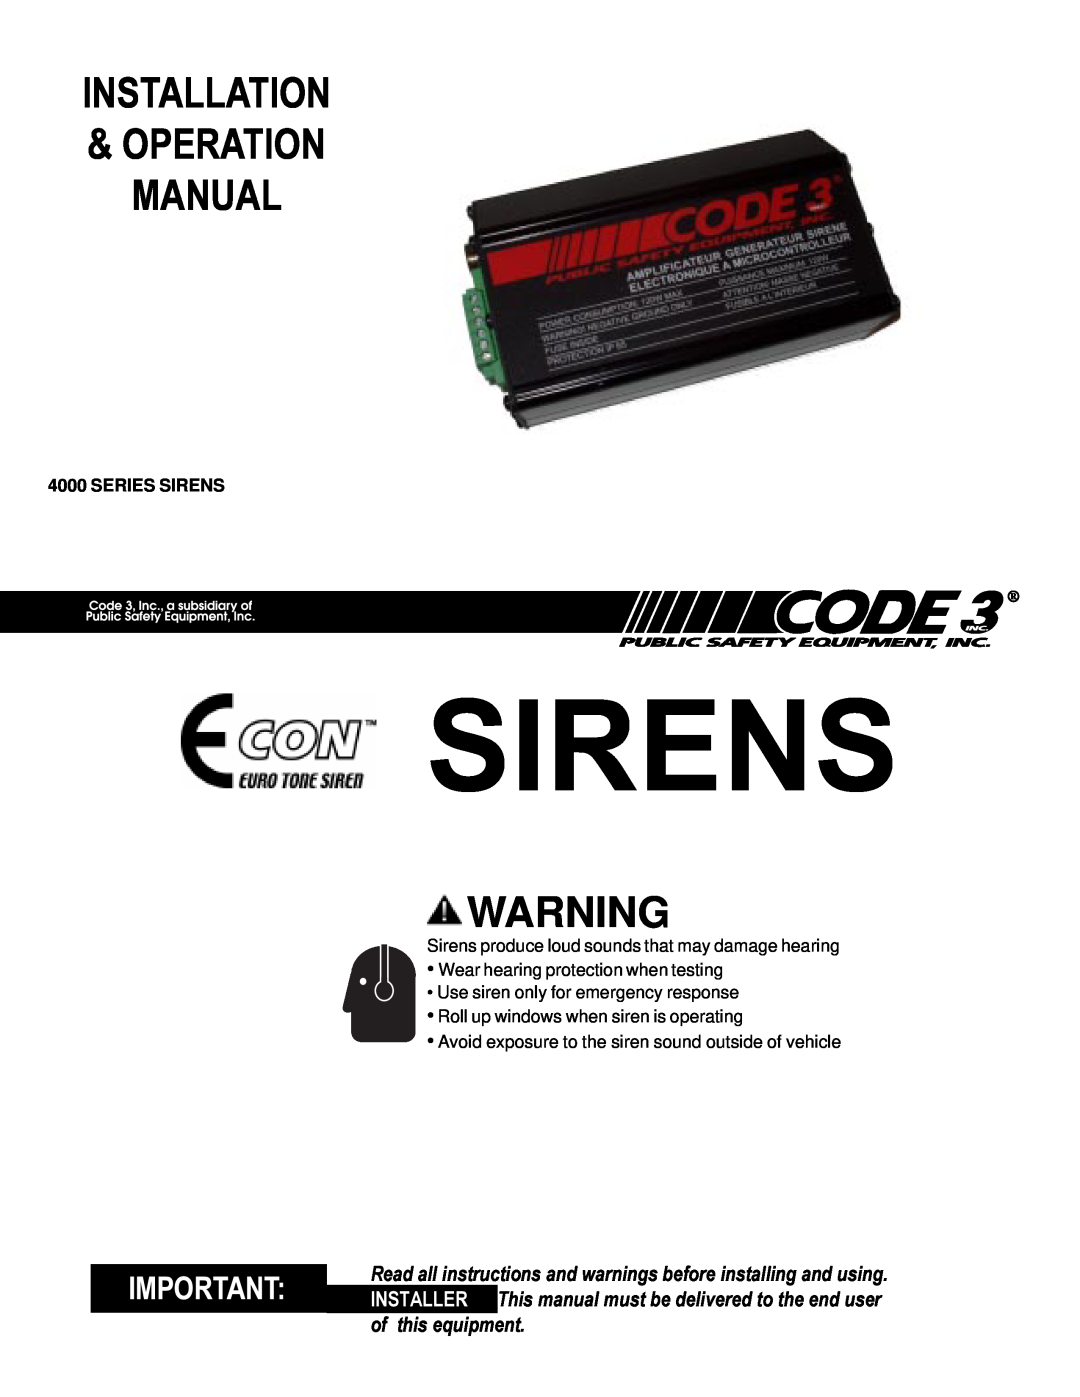 Bosch Appliances 4000 operation manual Series Sirens, Installation 